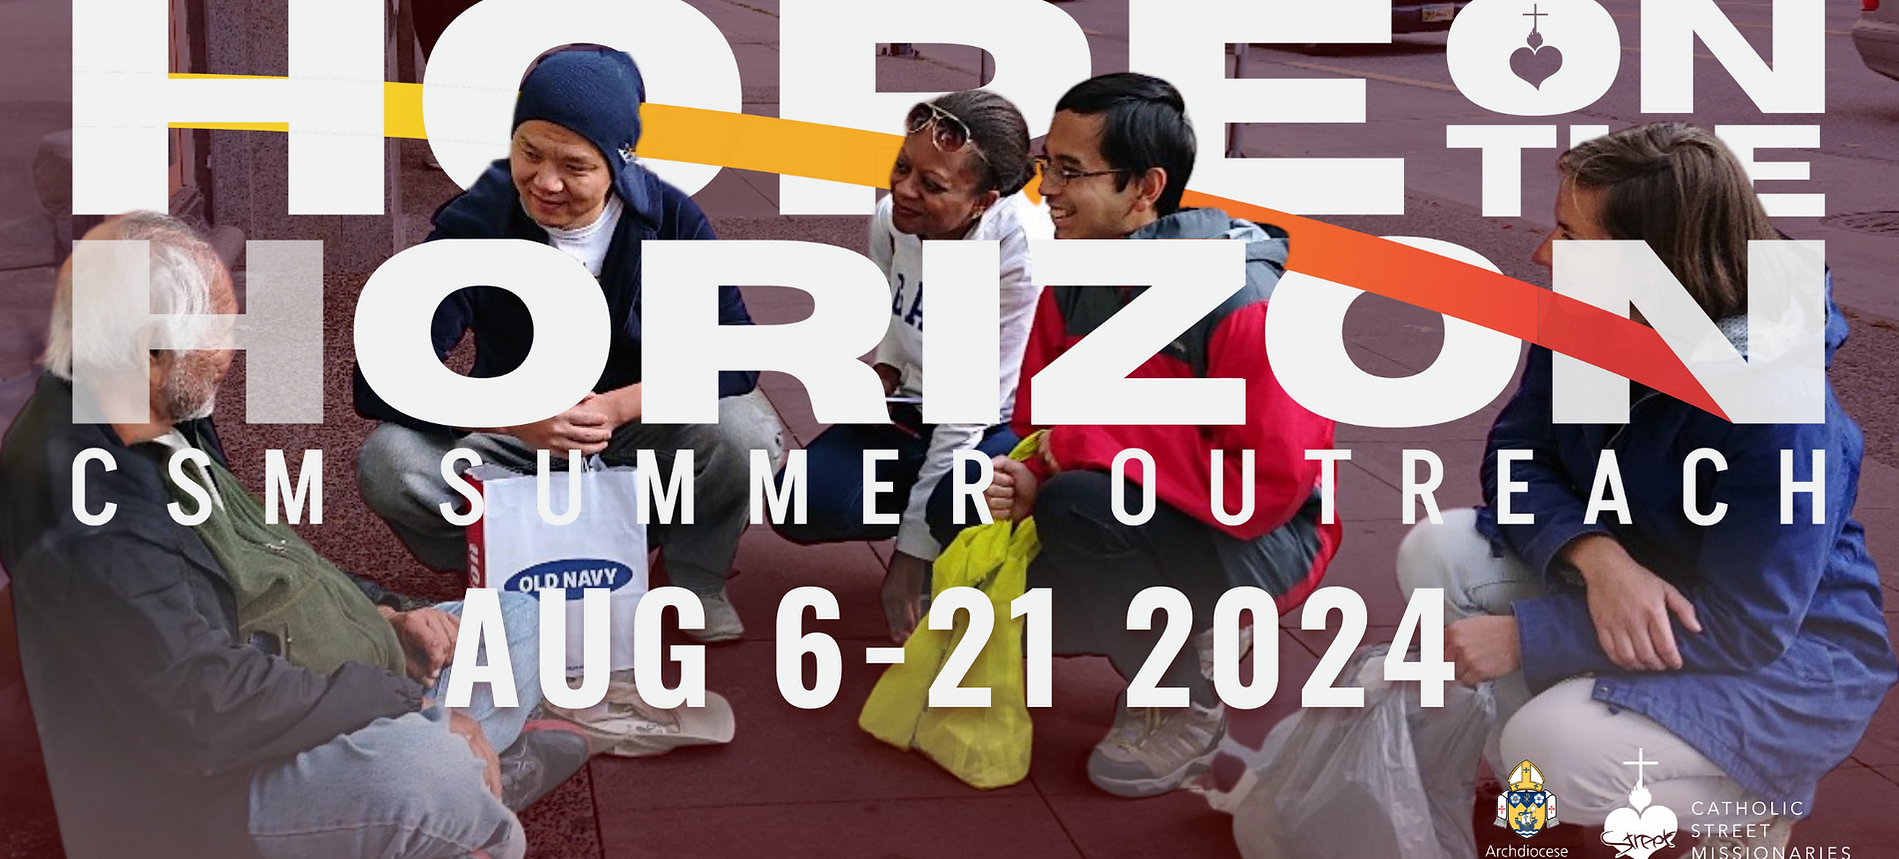 The Hope on the Horizon Summer Outreach program